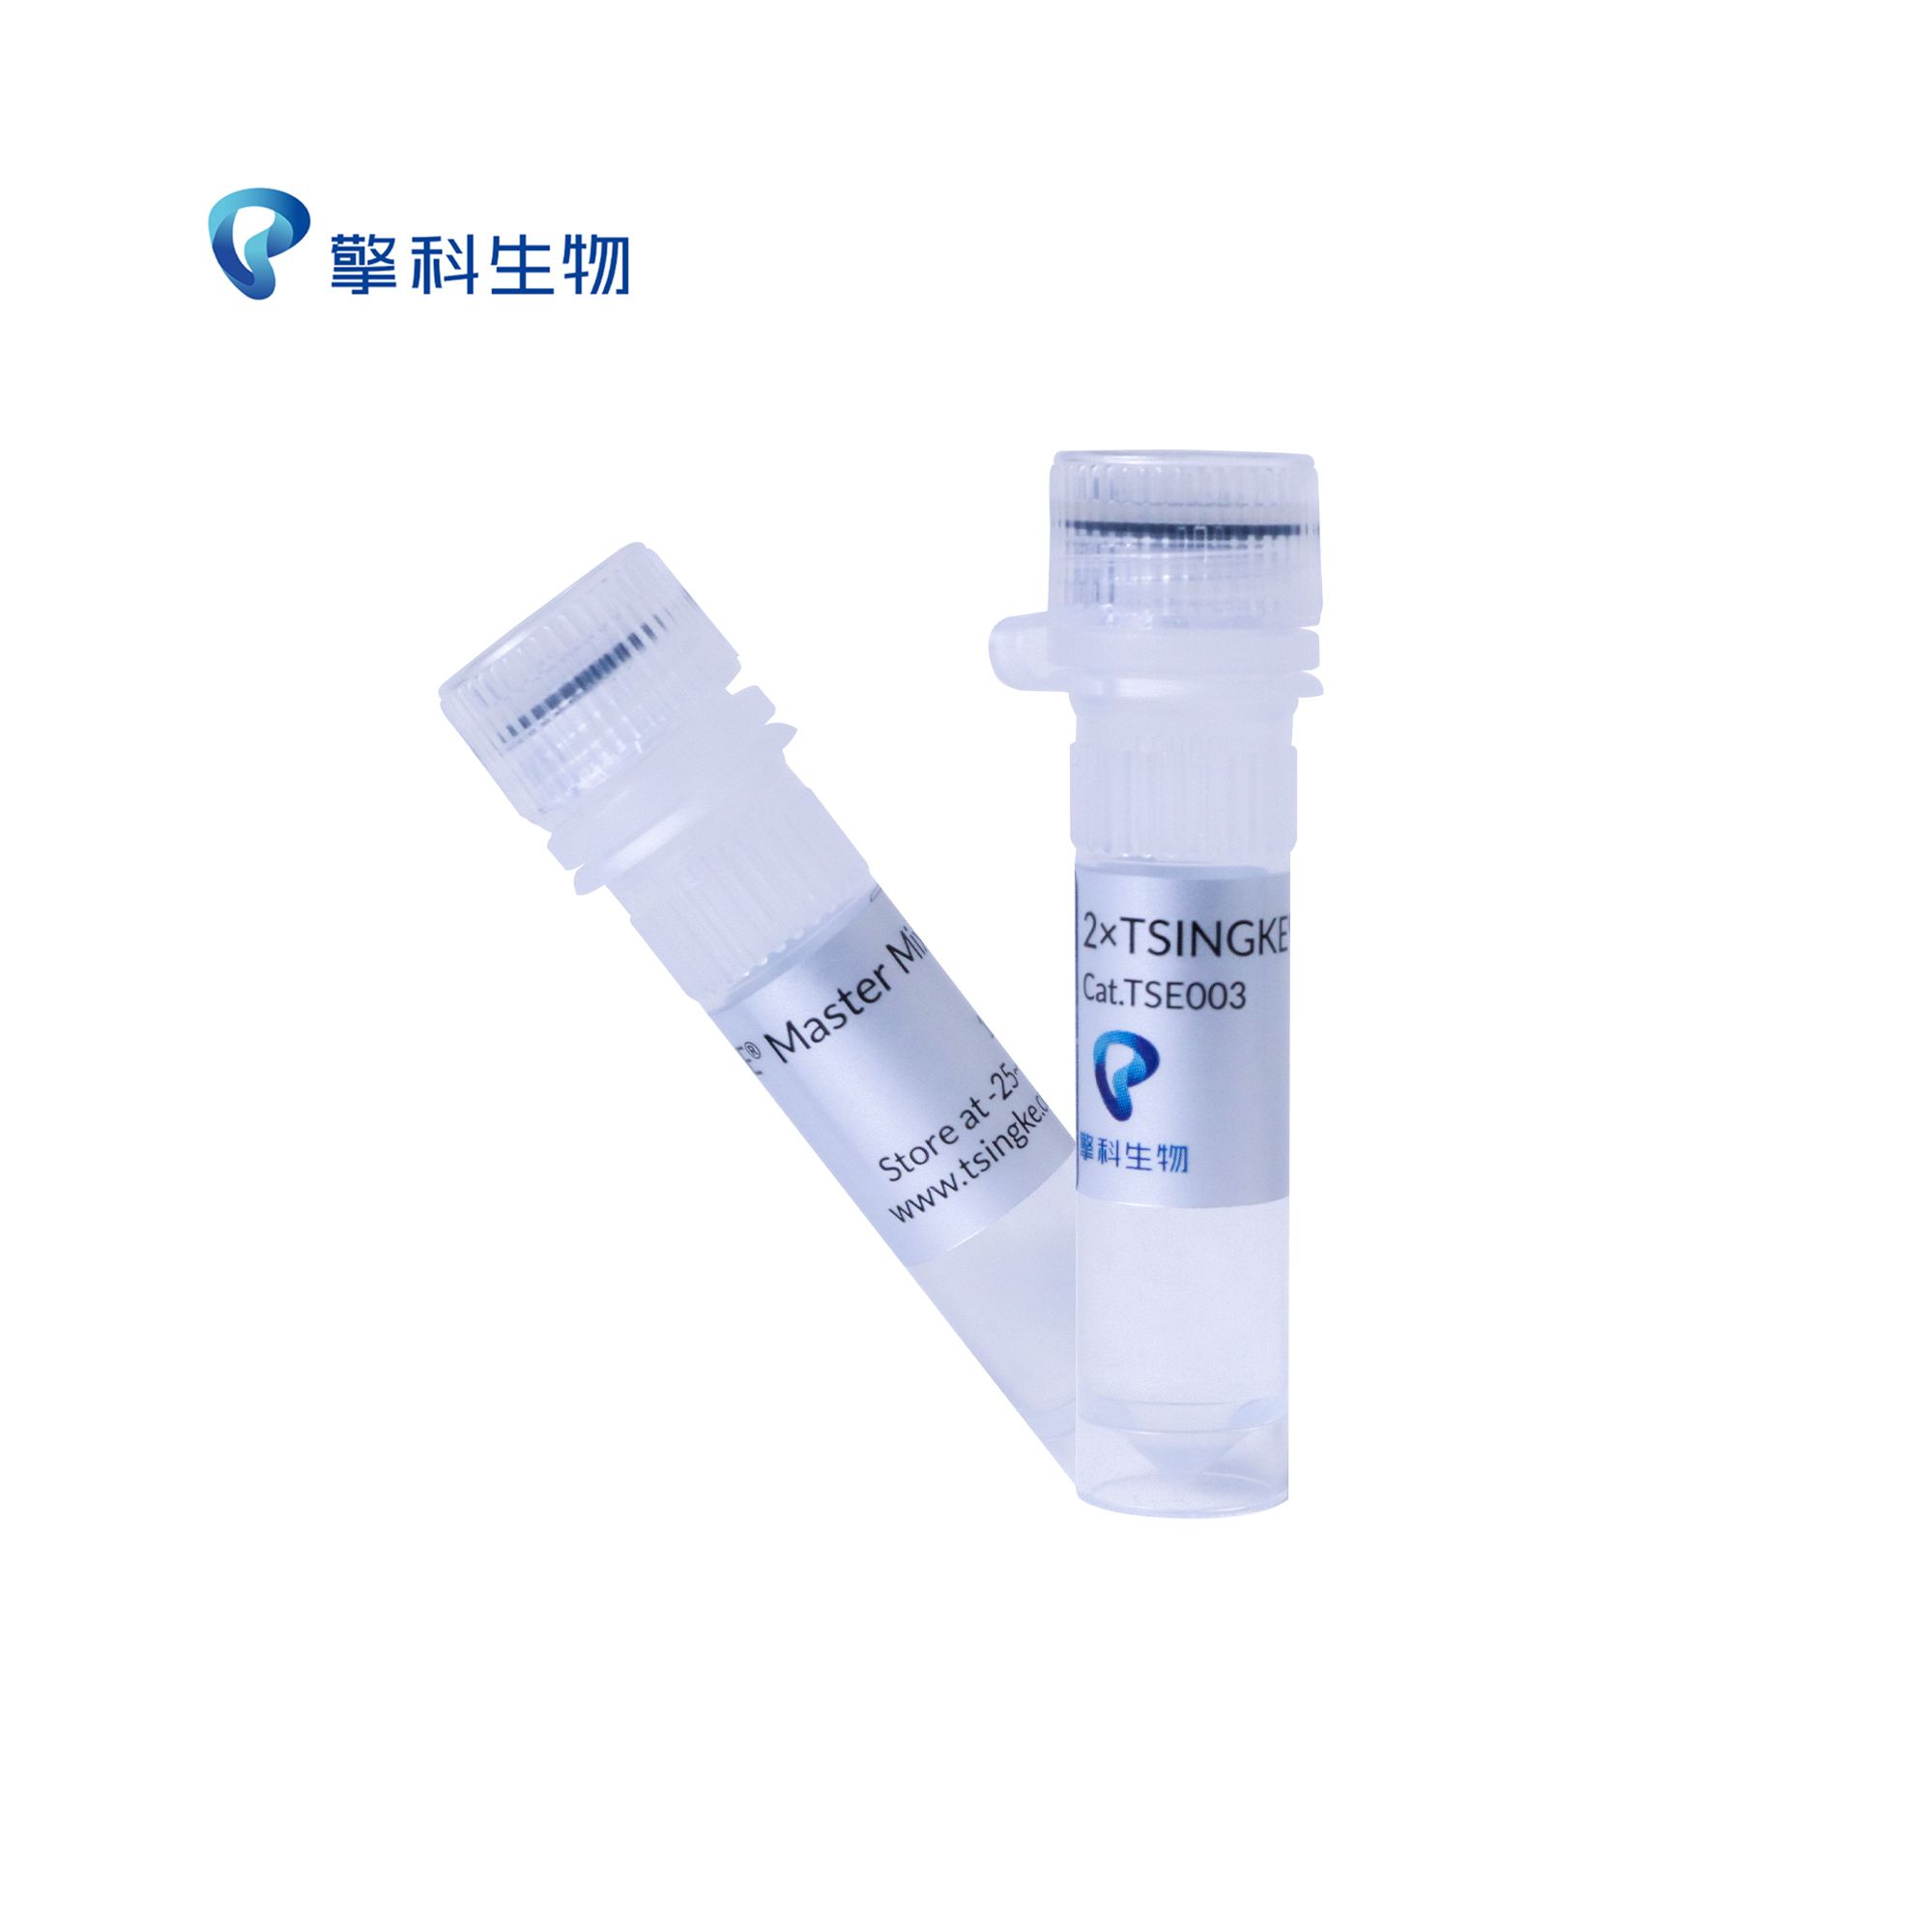 2×TSINGKE® Master Mix/热启动酶、高灵敏度、高产量、适用于多重PCR、无色mix/擎科生物TSINGKE